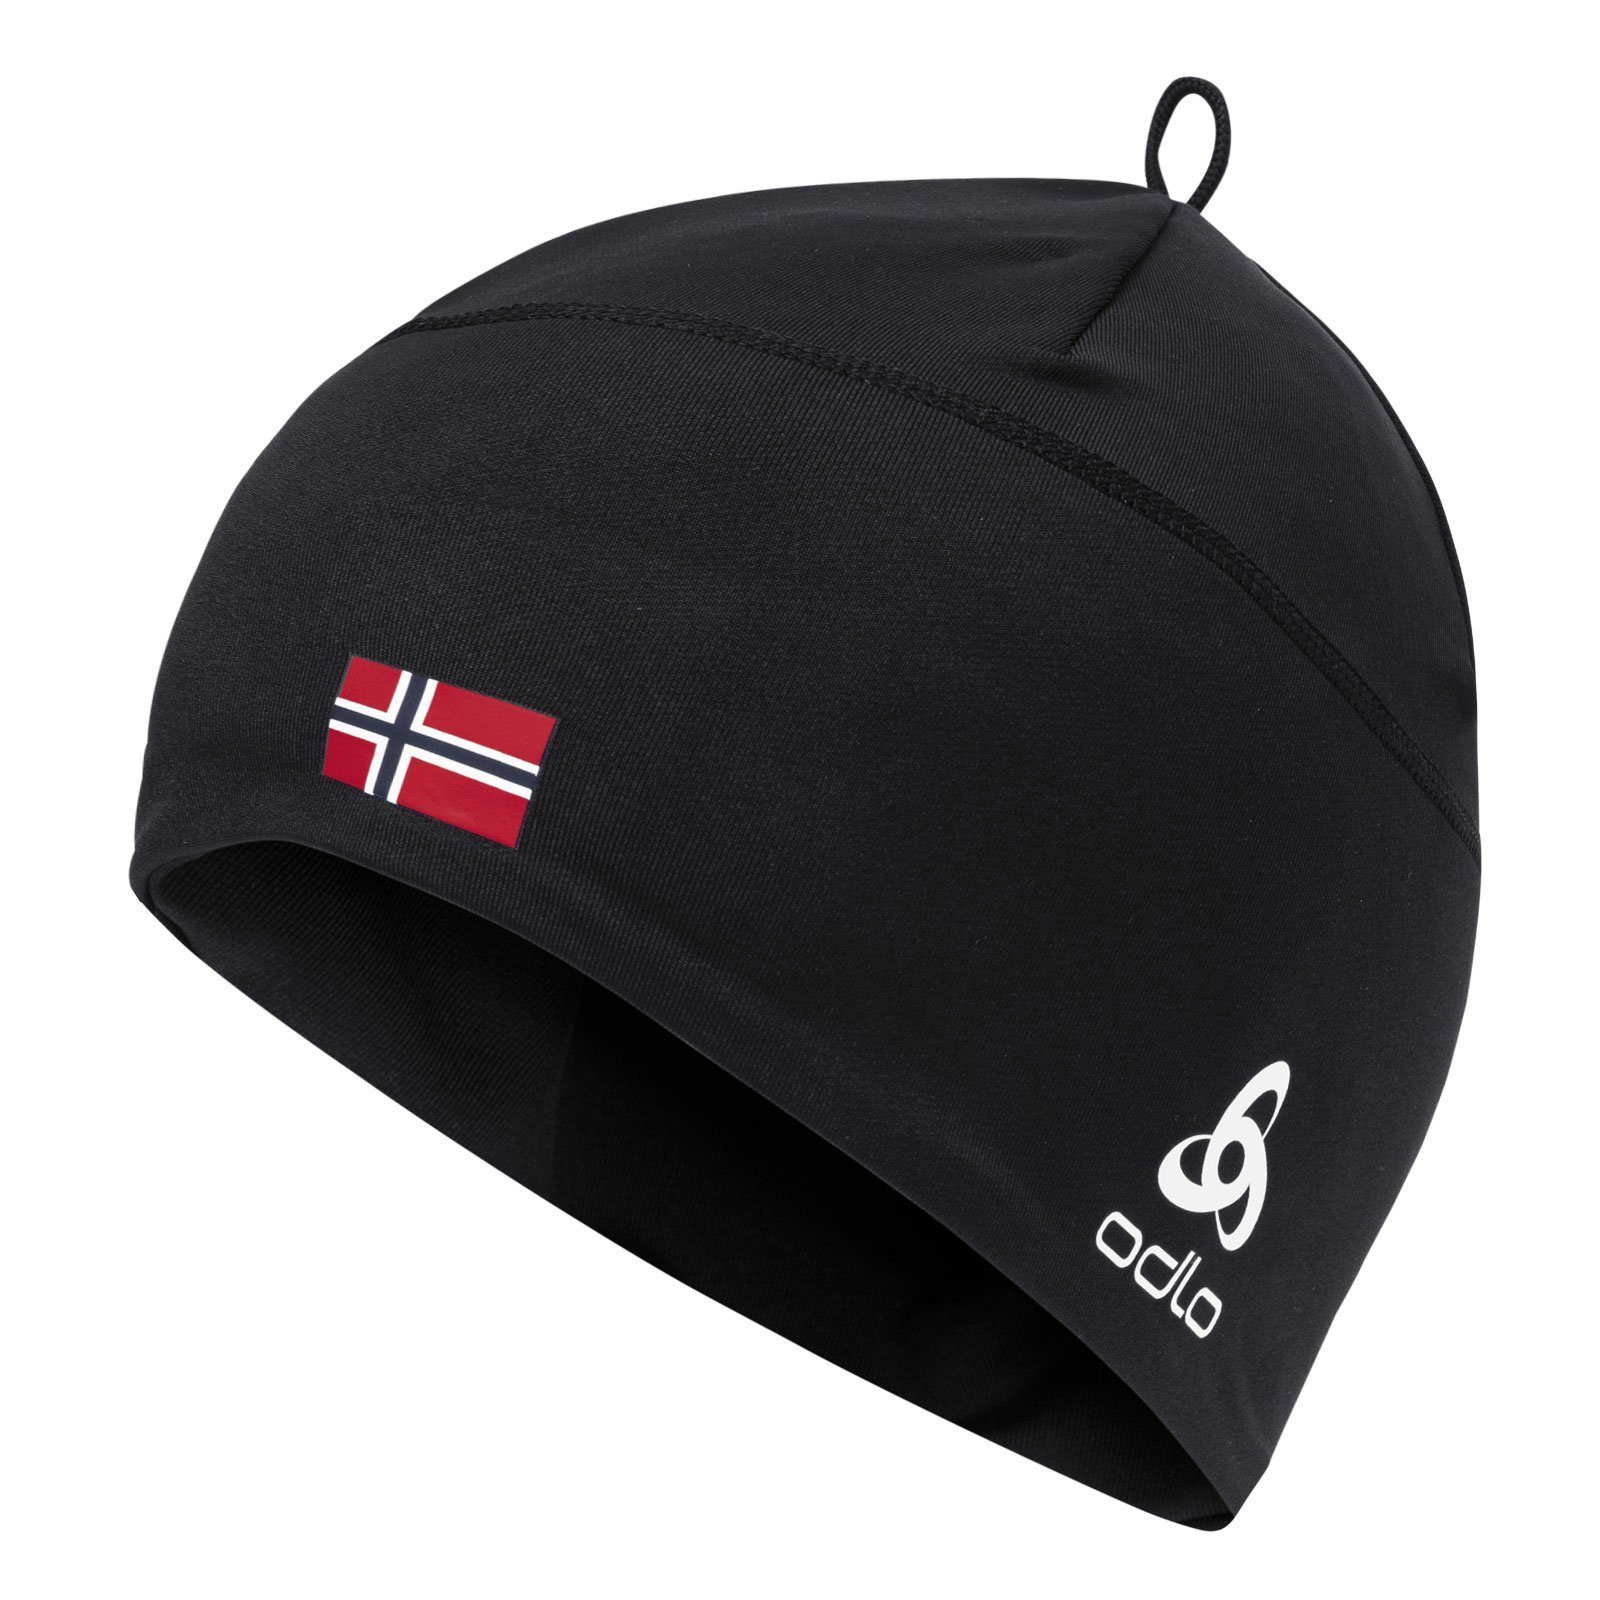 norwegian Eco flag / Flagge Fan black mit Warm Odlo Polyknit Beanie